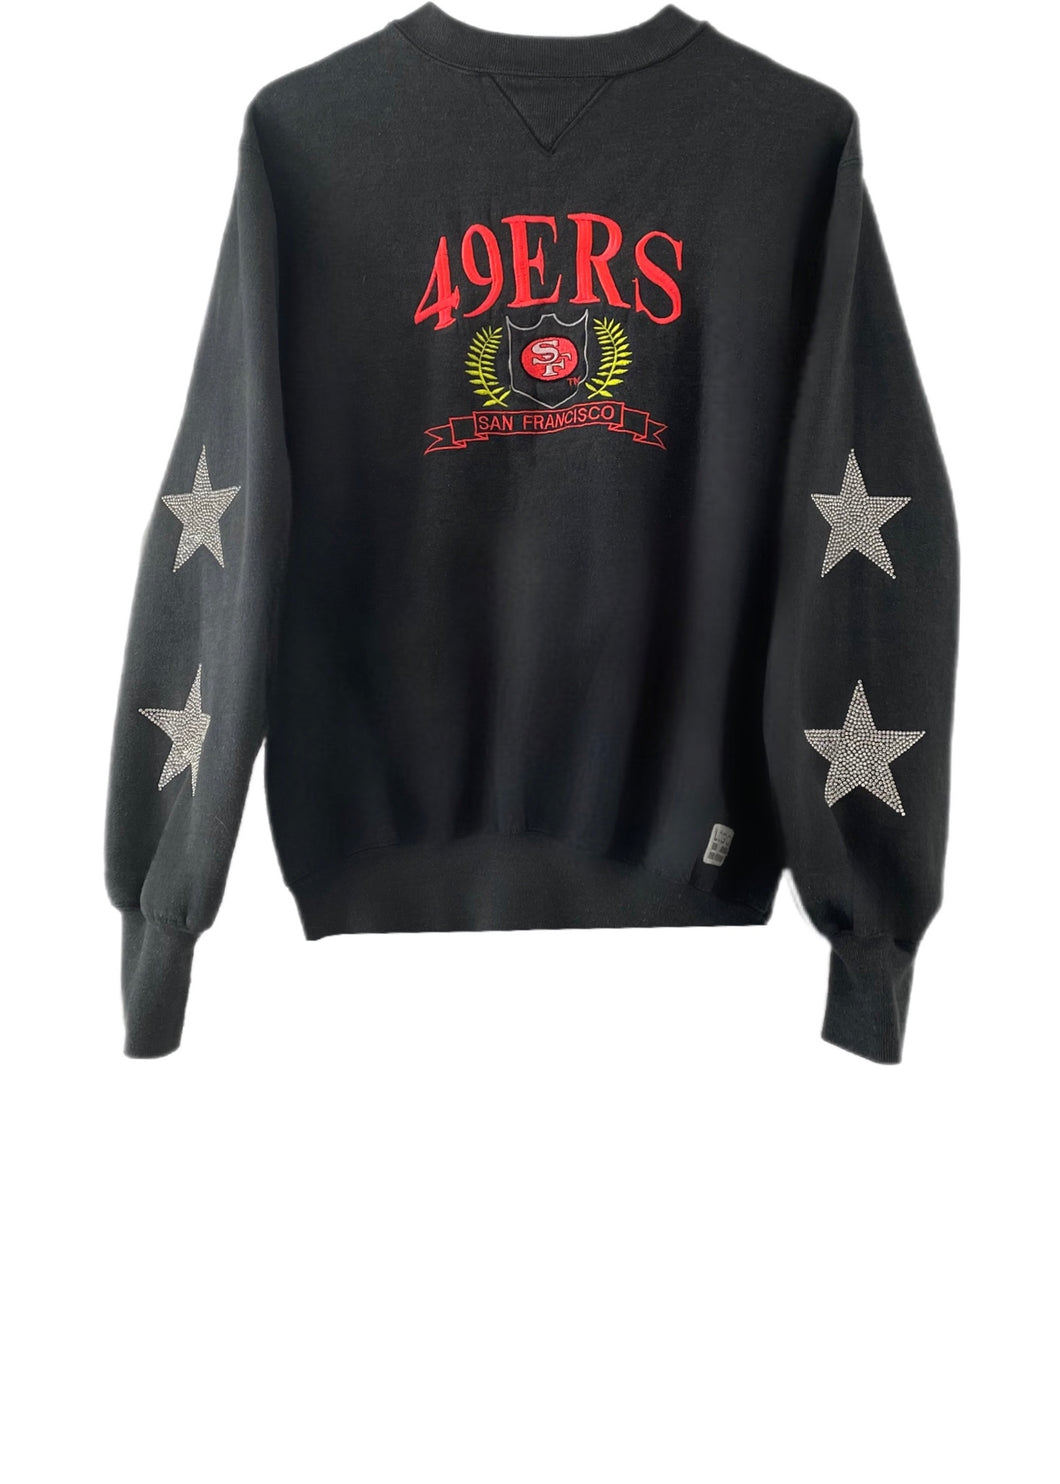 San Francisco 49ers, NFL One of a KIND Vintage Sweatshirt with Crystal Star Design